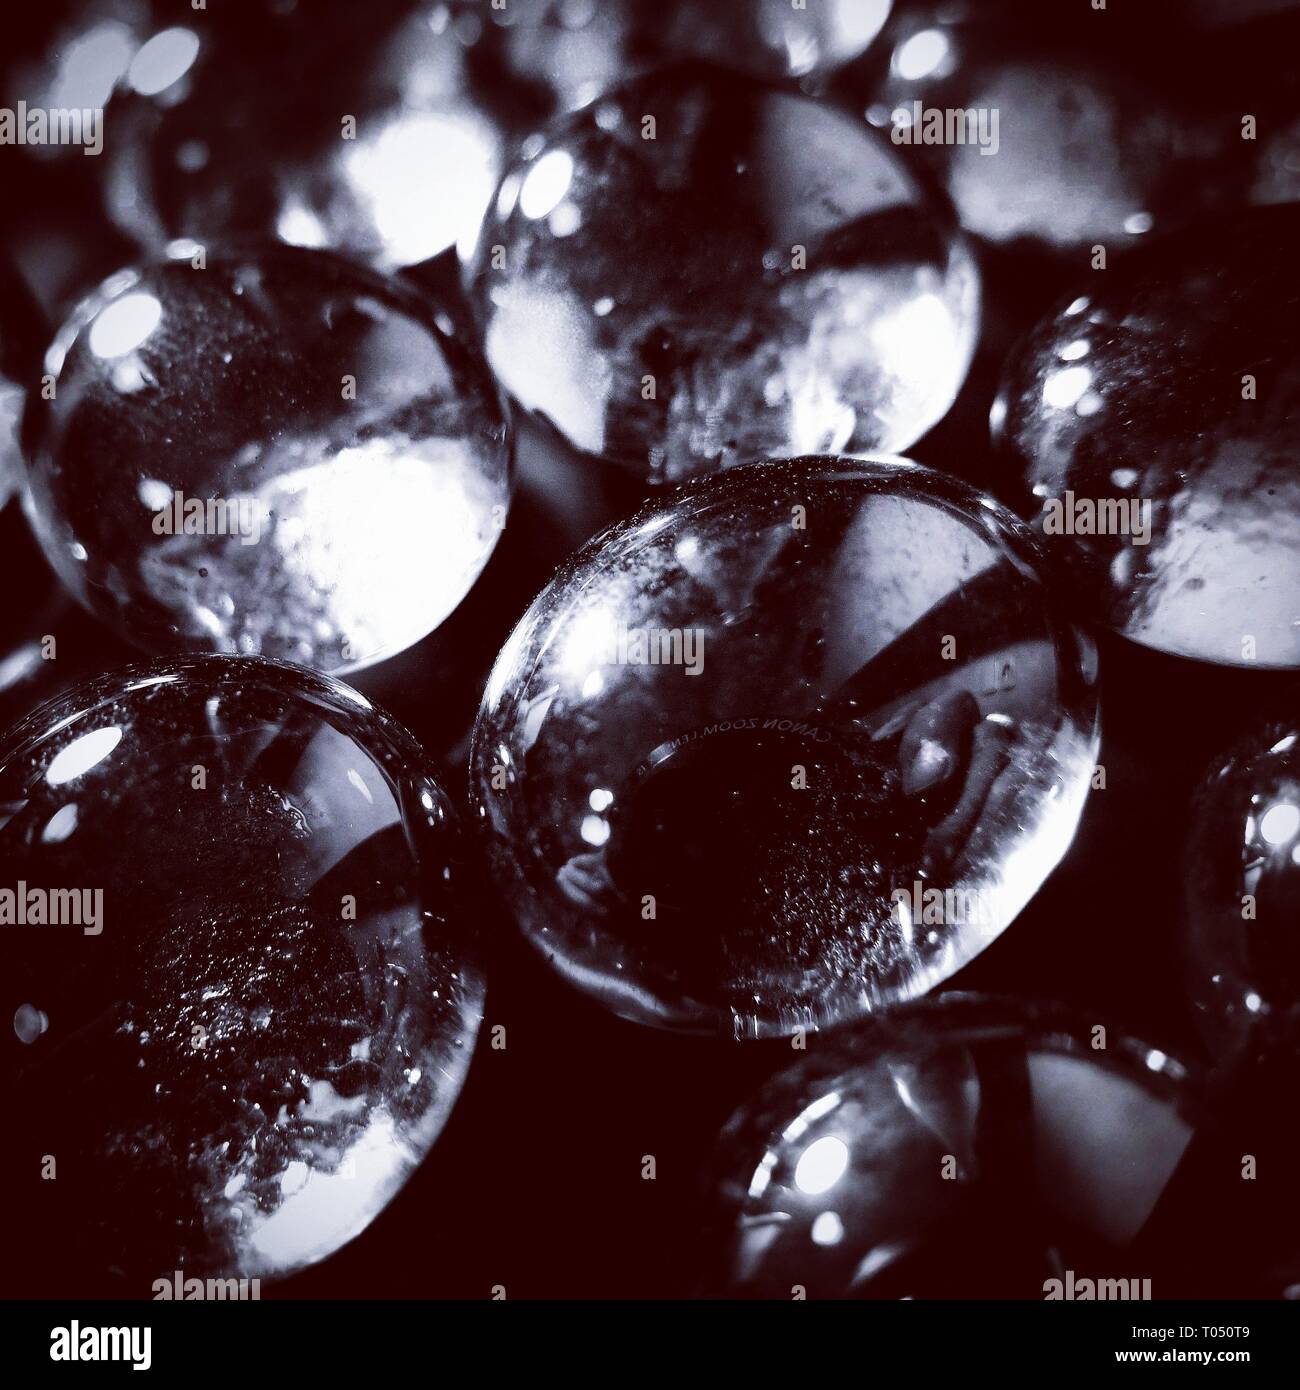 Decorative glass marbles. Concept : Parallel universes. Stock Photo